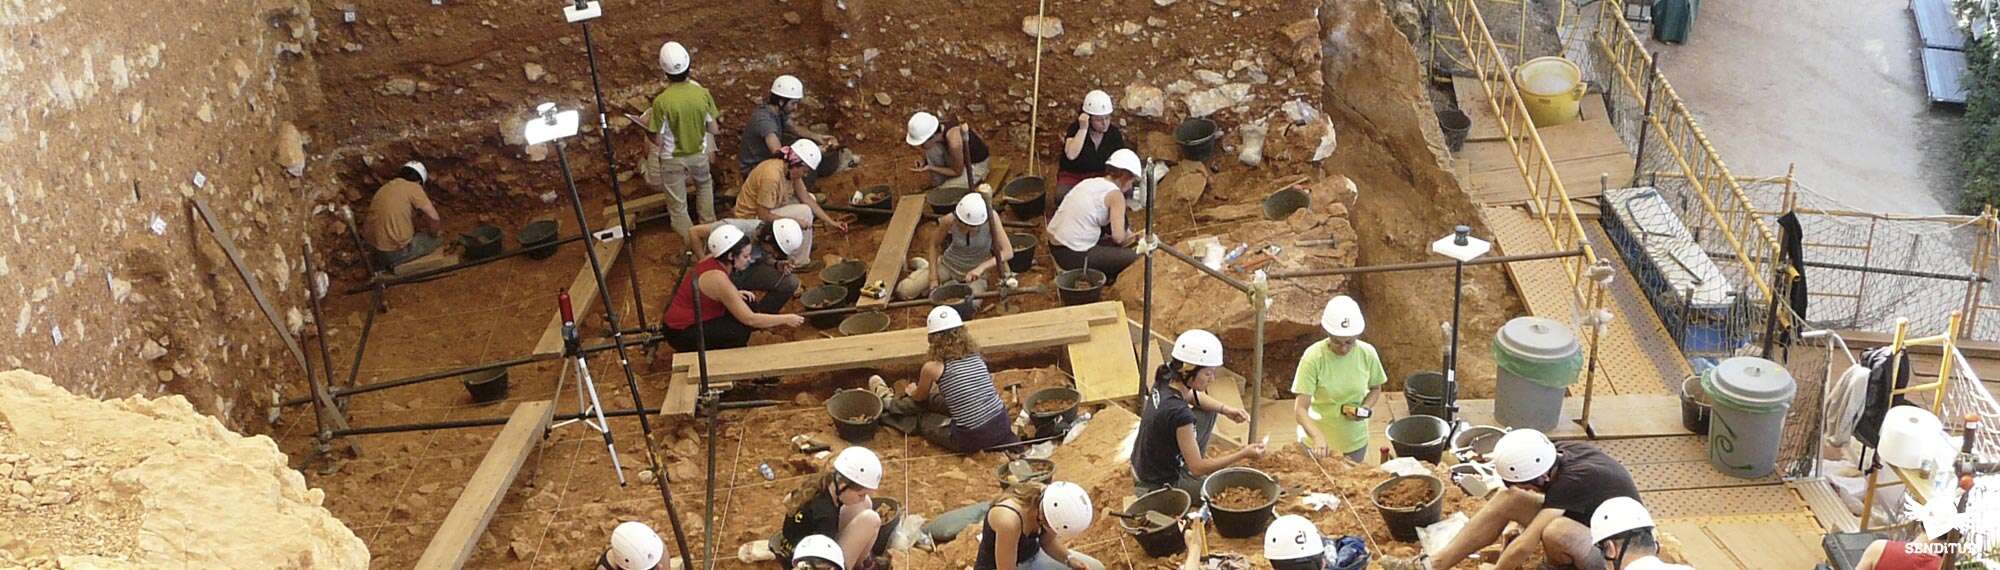 Yacimiento Arqueológico de Atapuerca